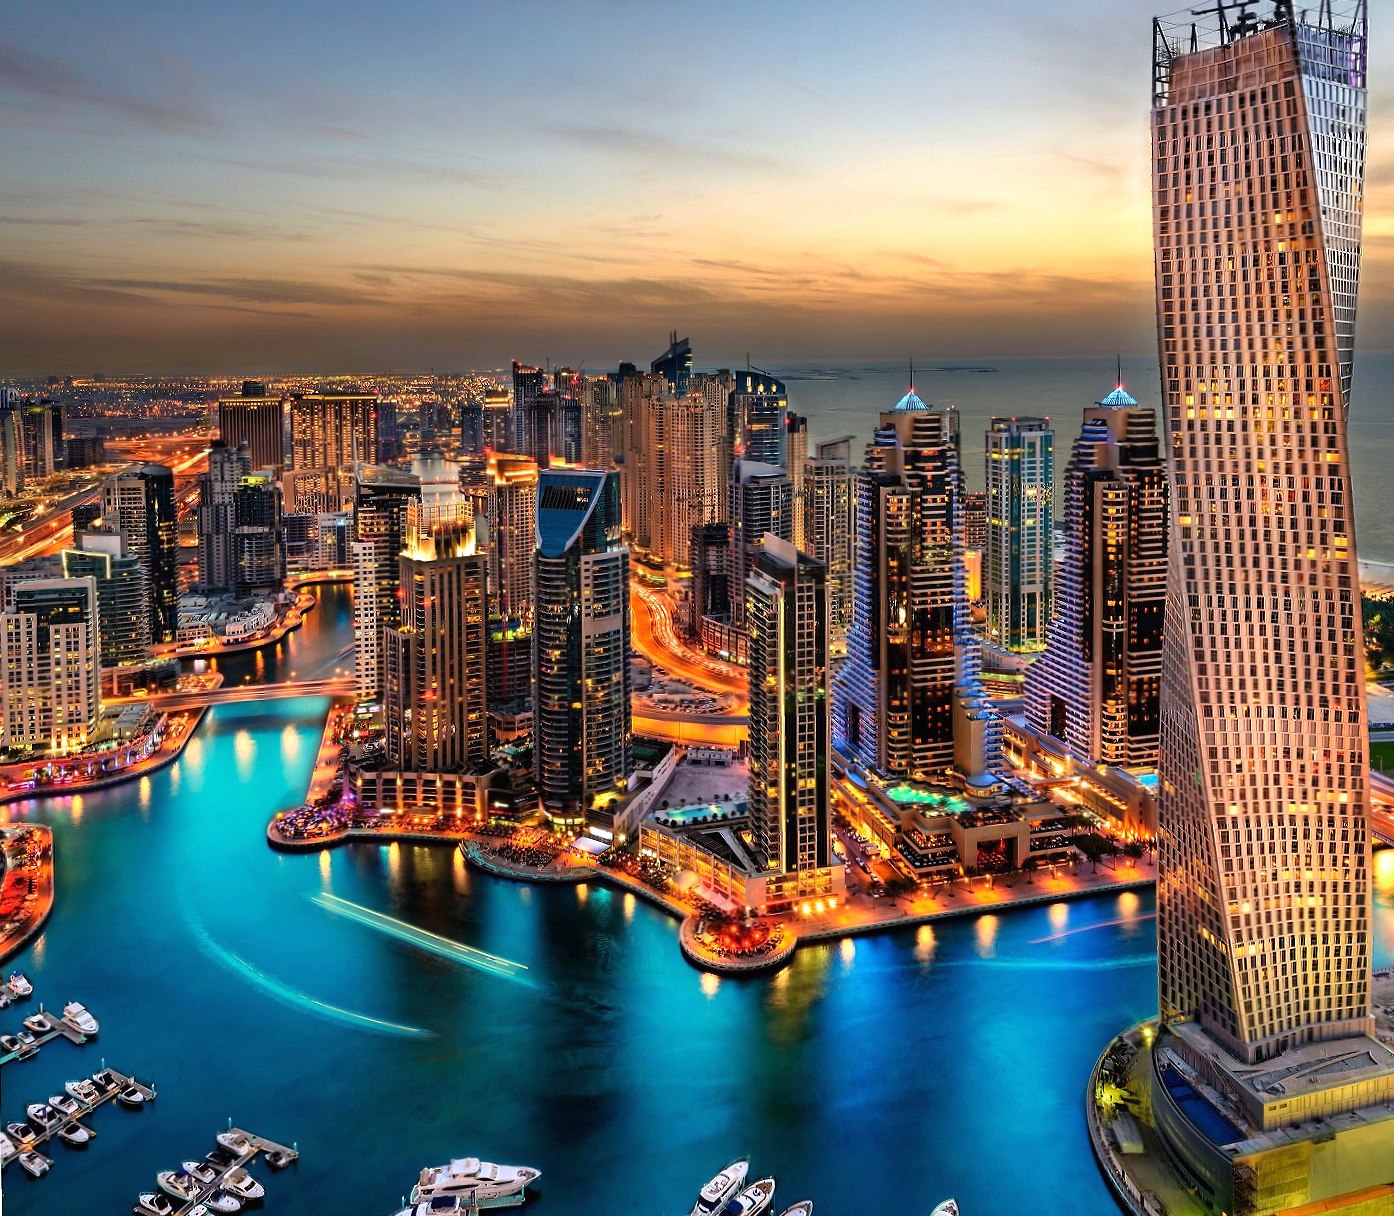 Dubai 4k at 1024 x 1024 iPad size wallpapers HD quality